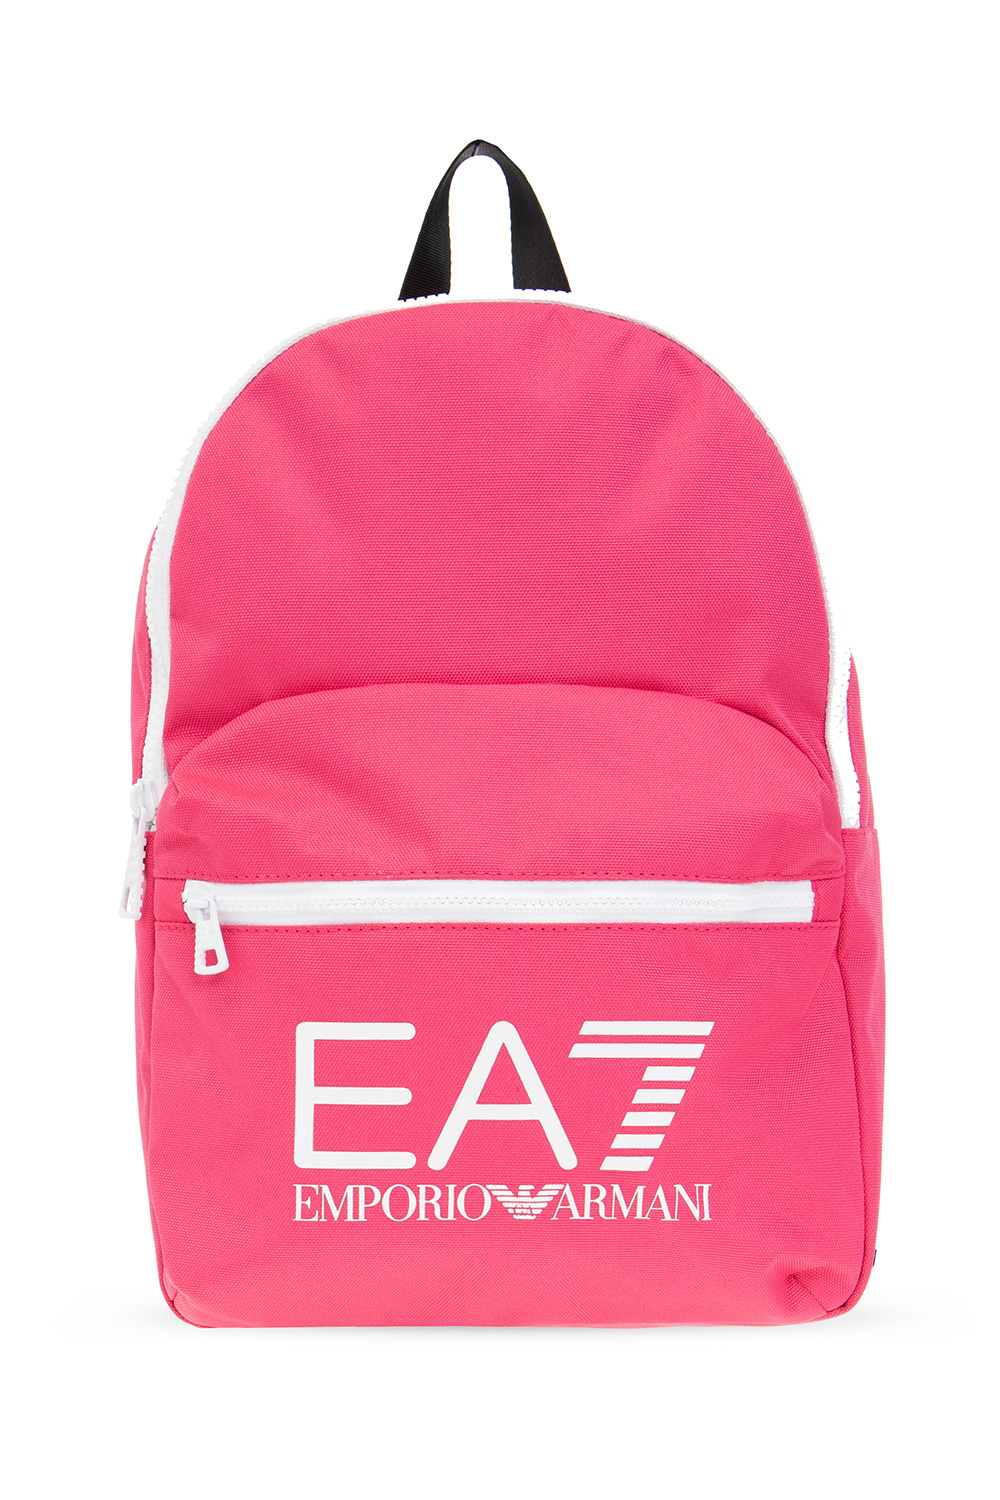 EA7 Emporio armani dress Backpack with logo